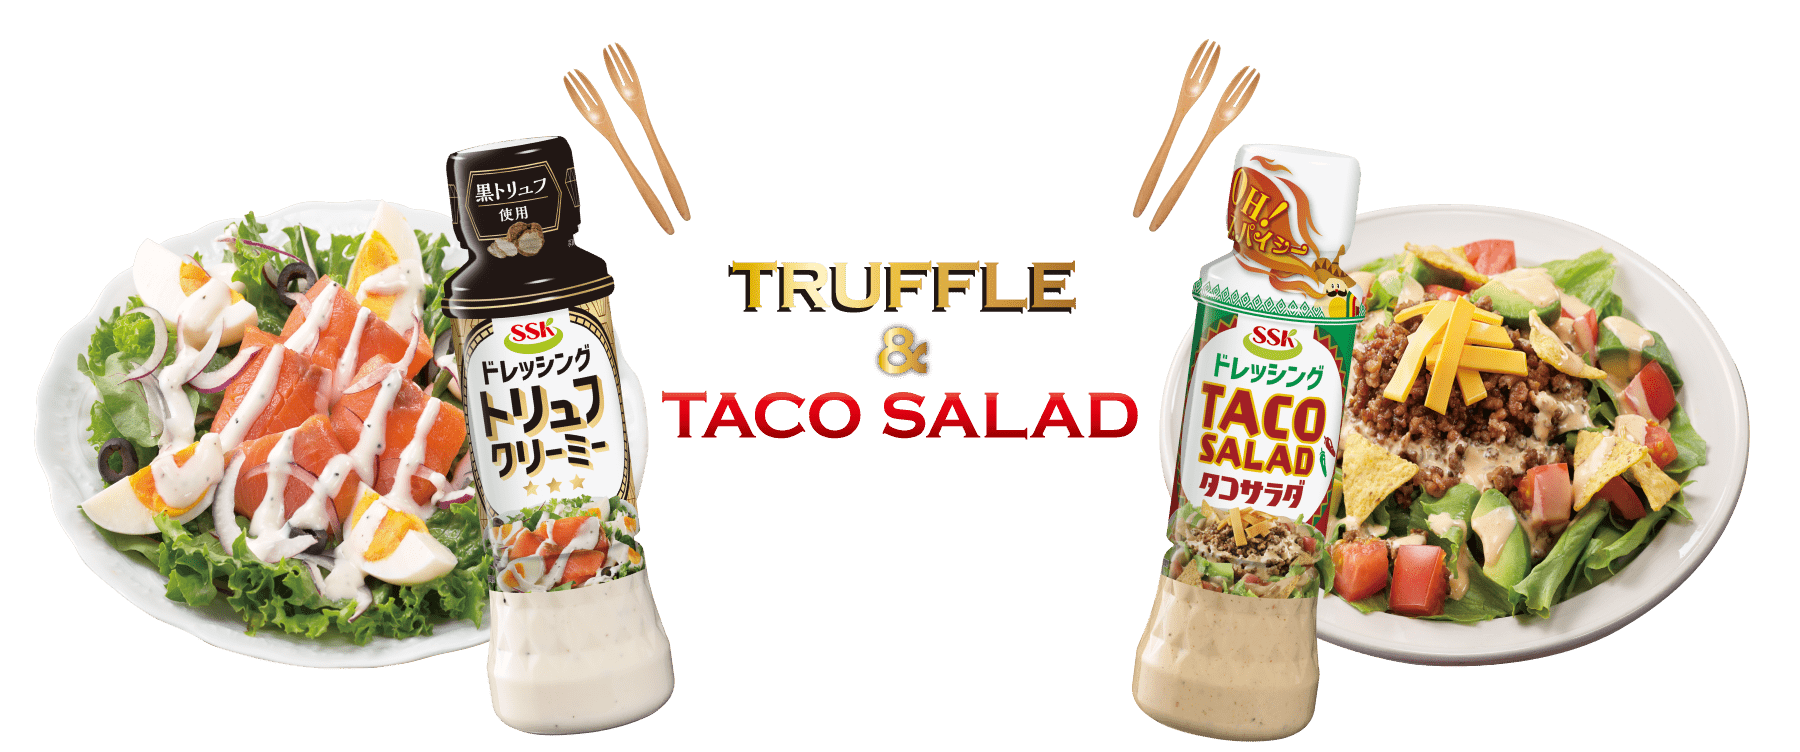 TRUFFLE & TACO SALAD